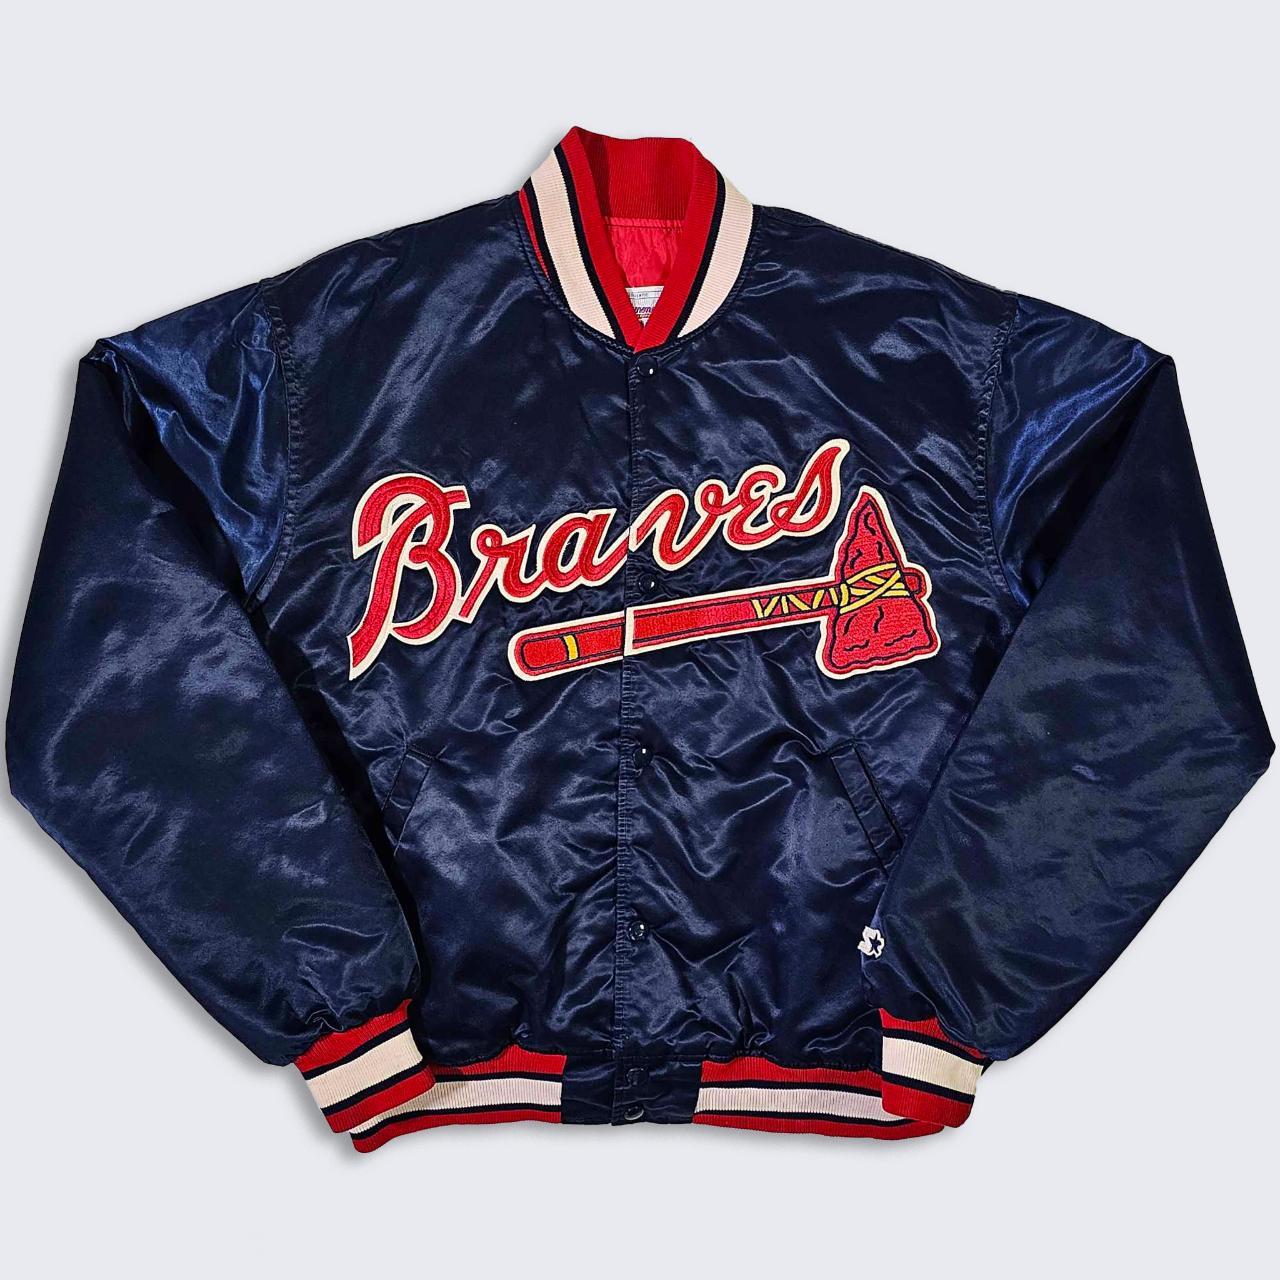 MLB Atlanta Braves Red and Blue Varsity Jacket - HJacket